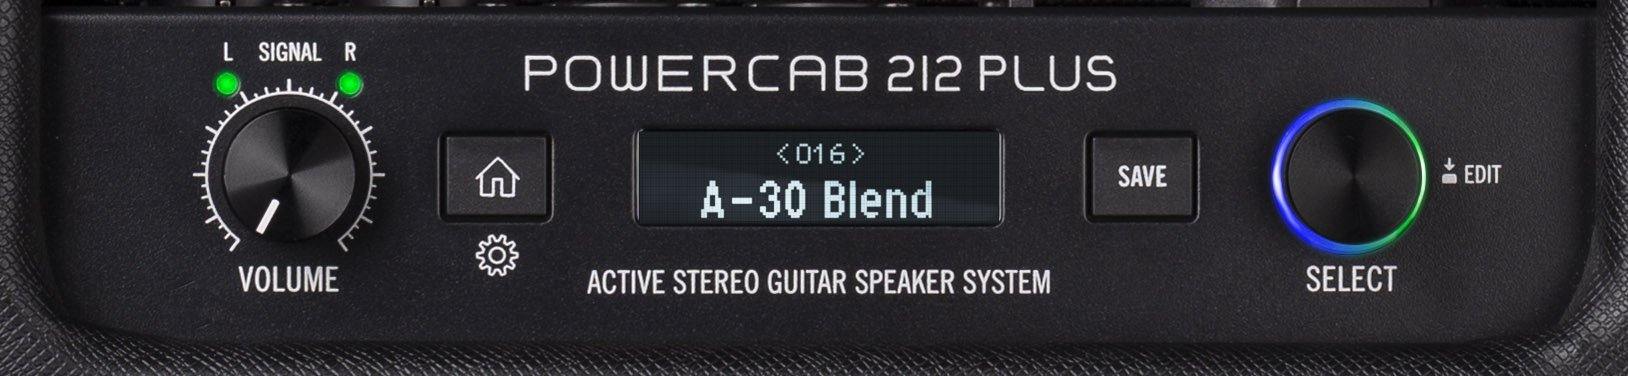 Line 6 Powercab 212 Plus - Guitar Brando